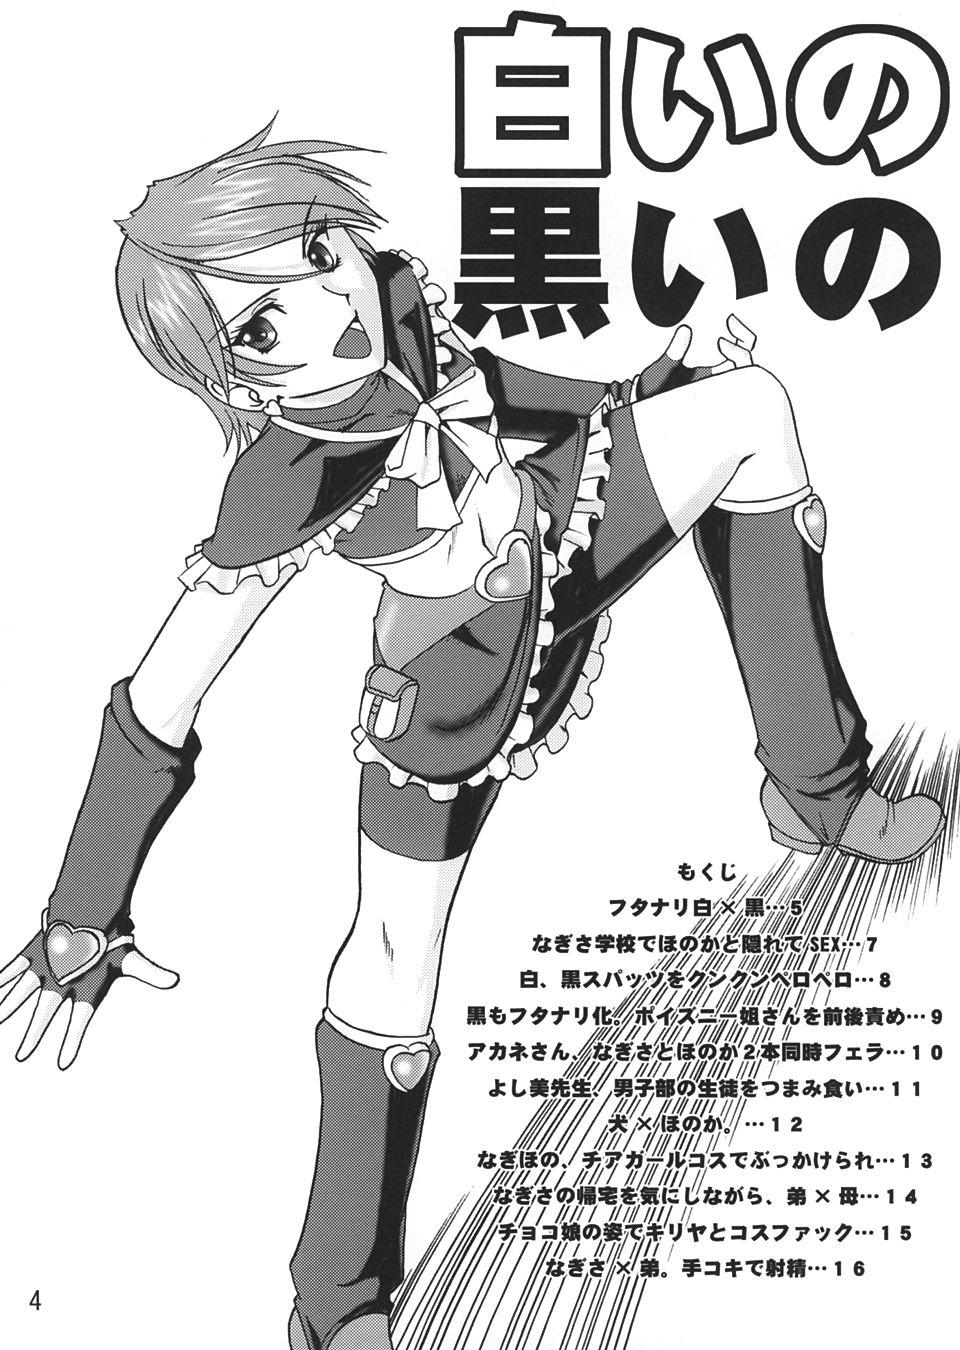 Tiny SEMEDAIN G WORKS vol.22 - Shiroi no Kuroi no - Pretty cure Lady - Page 3